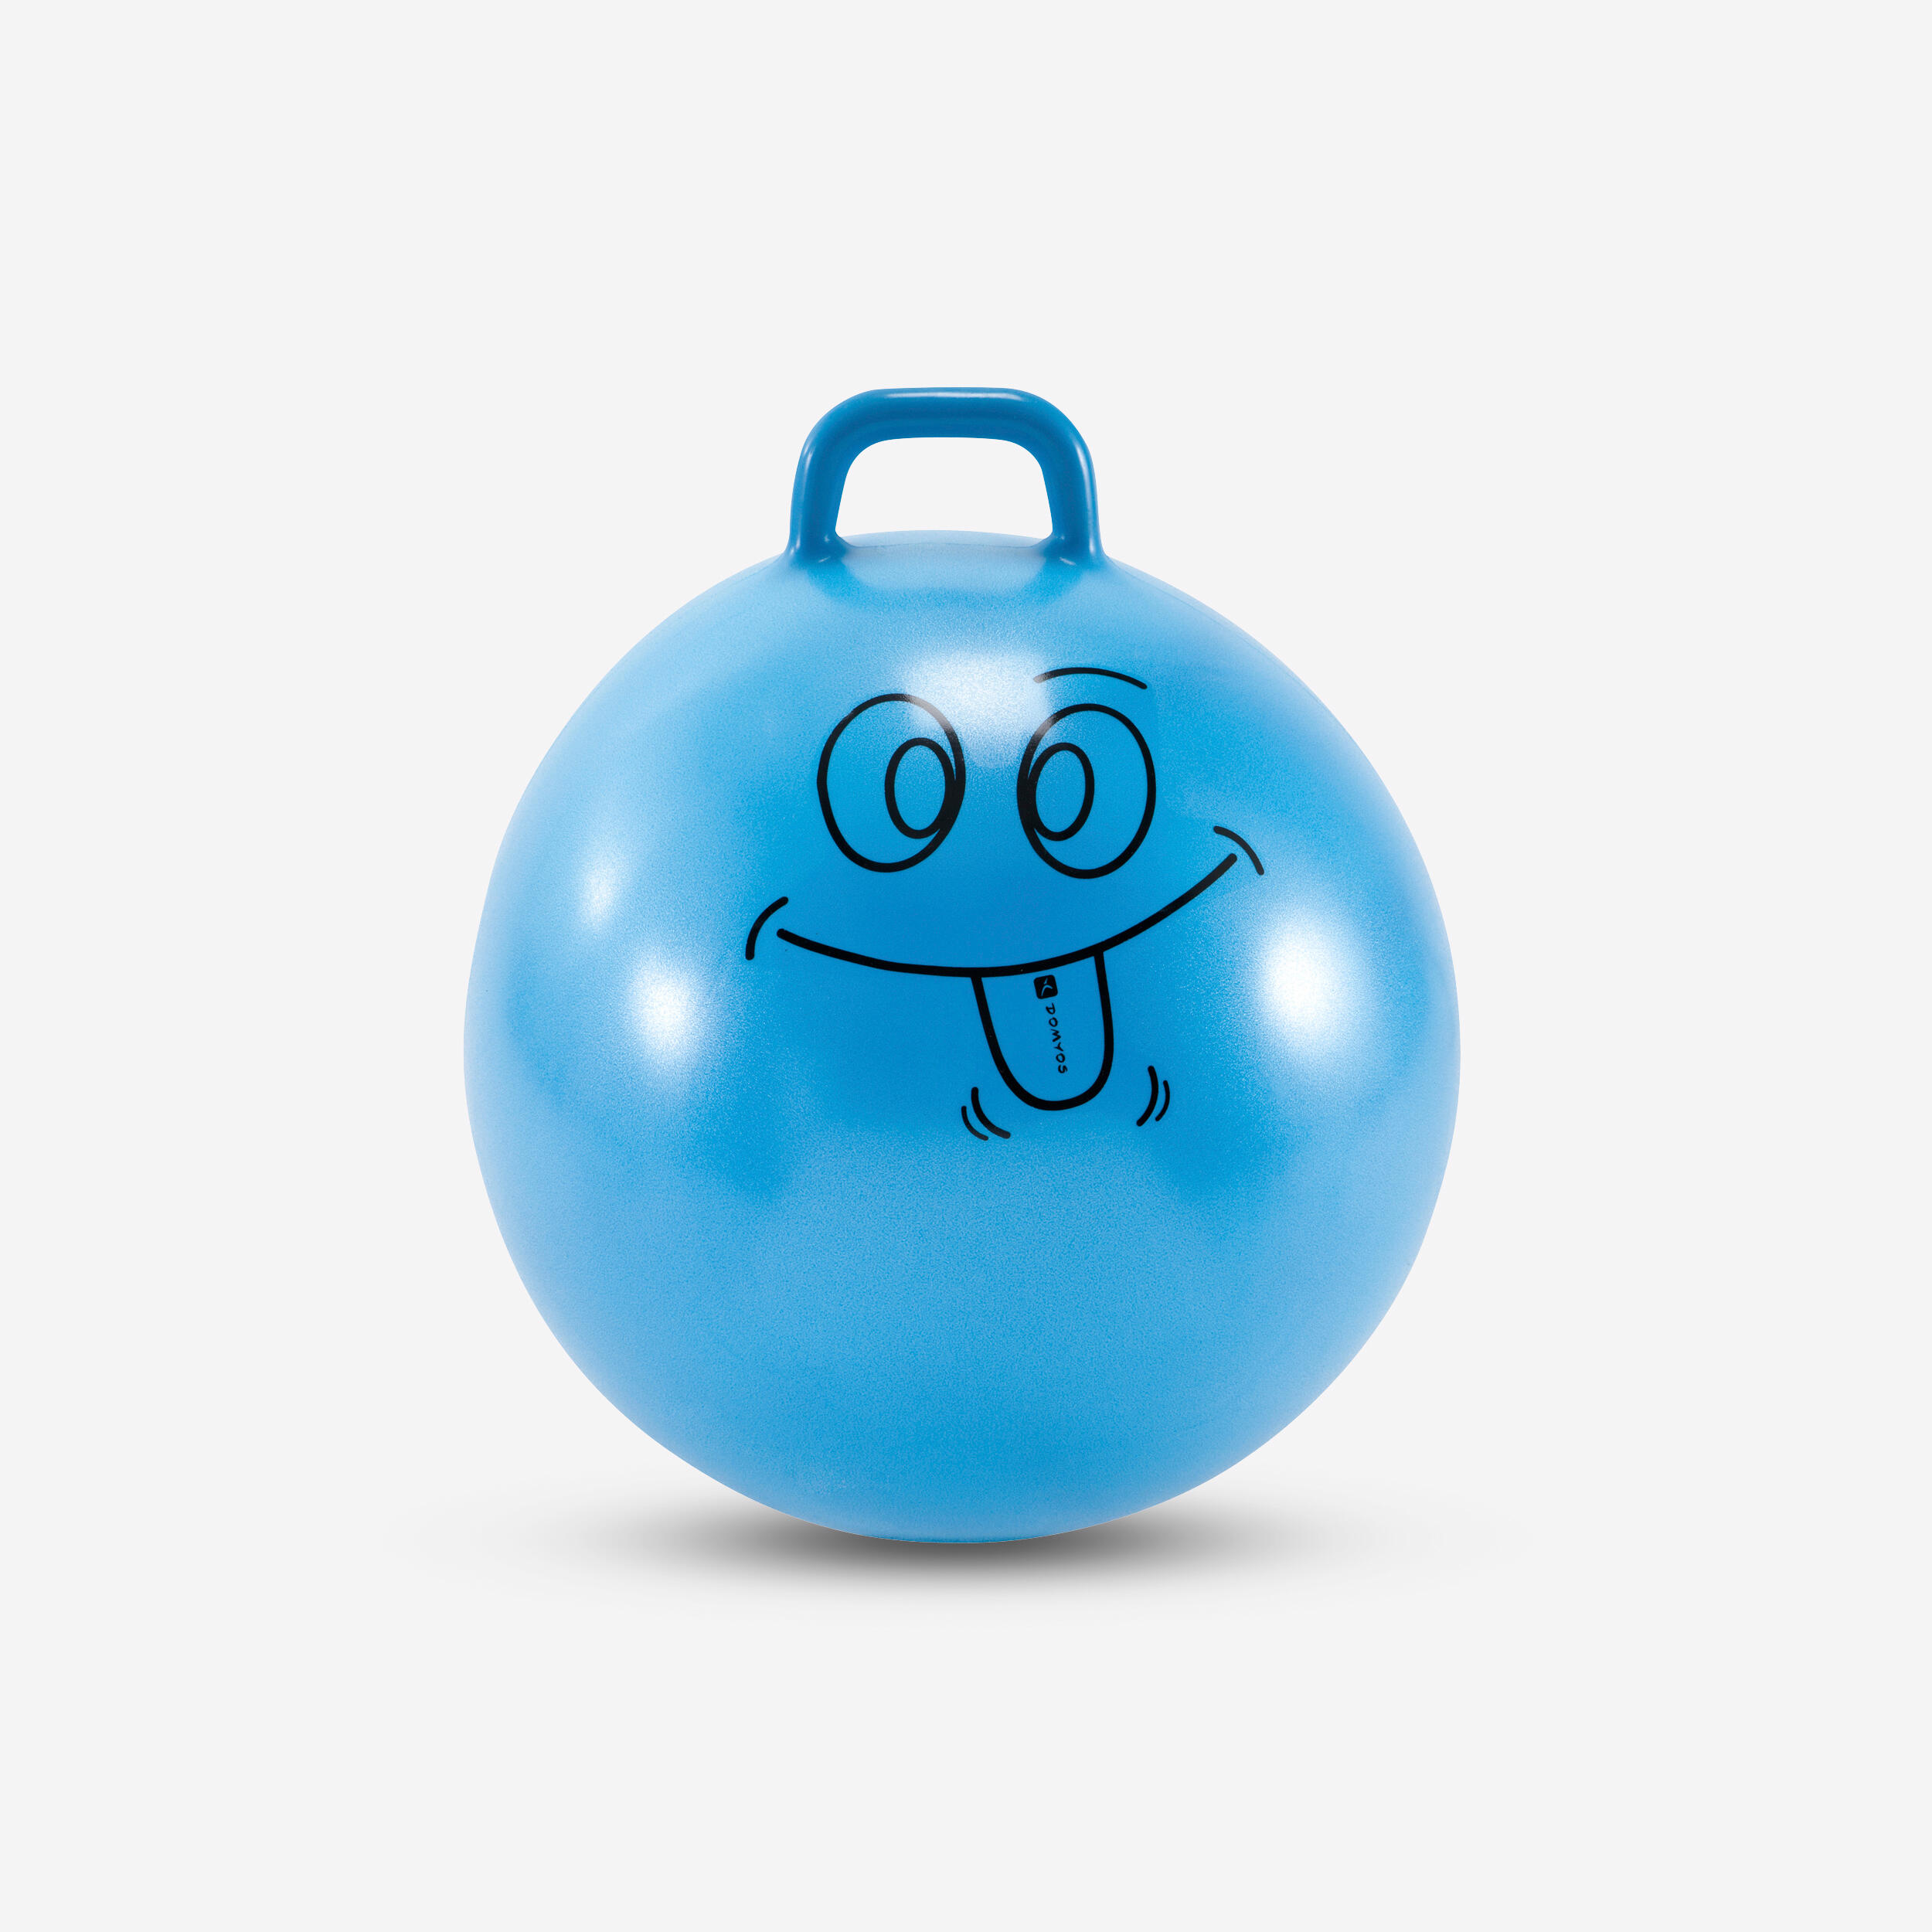 Ballon sauteur enfant – Resist bleu - DOMYOS